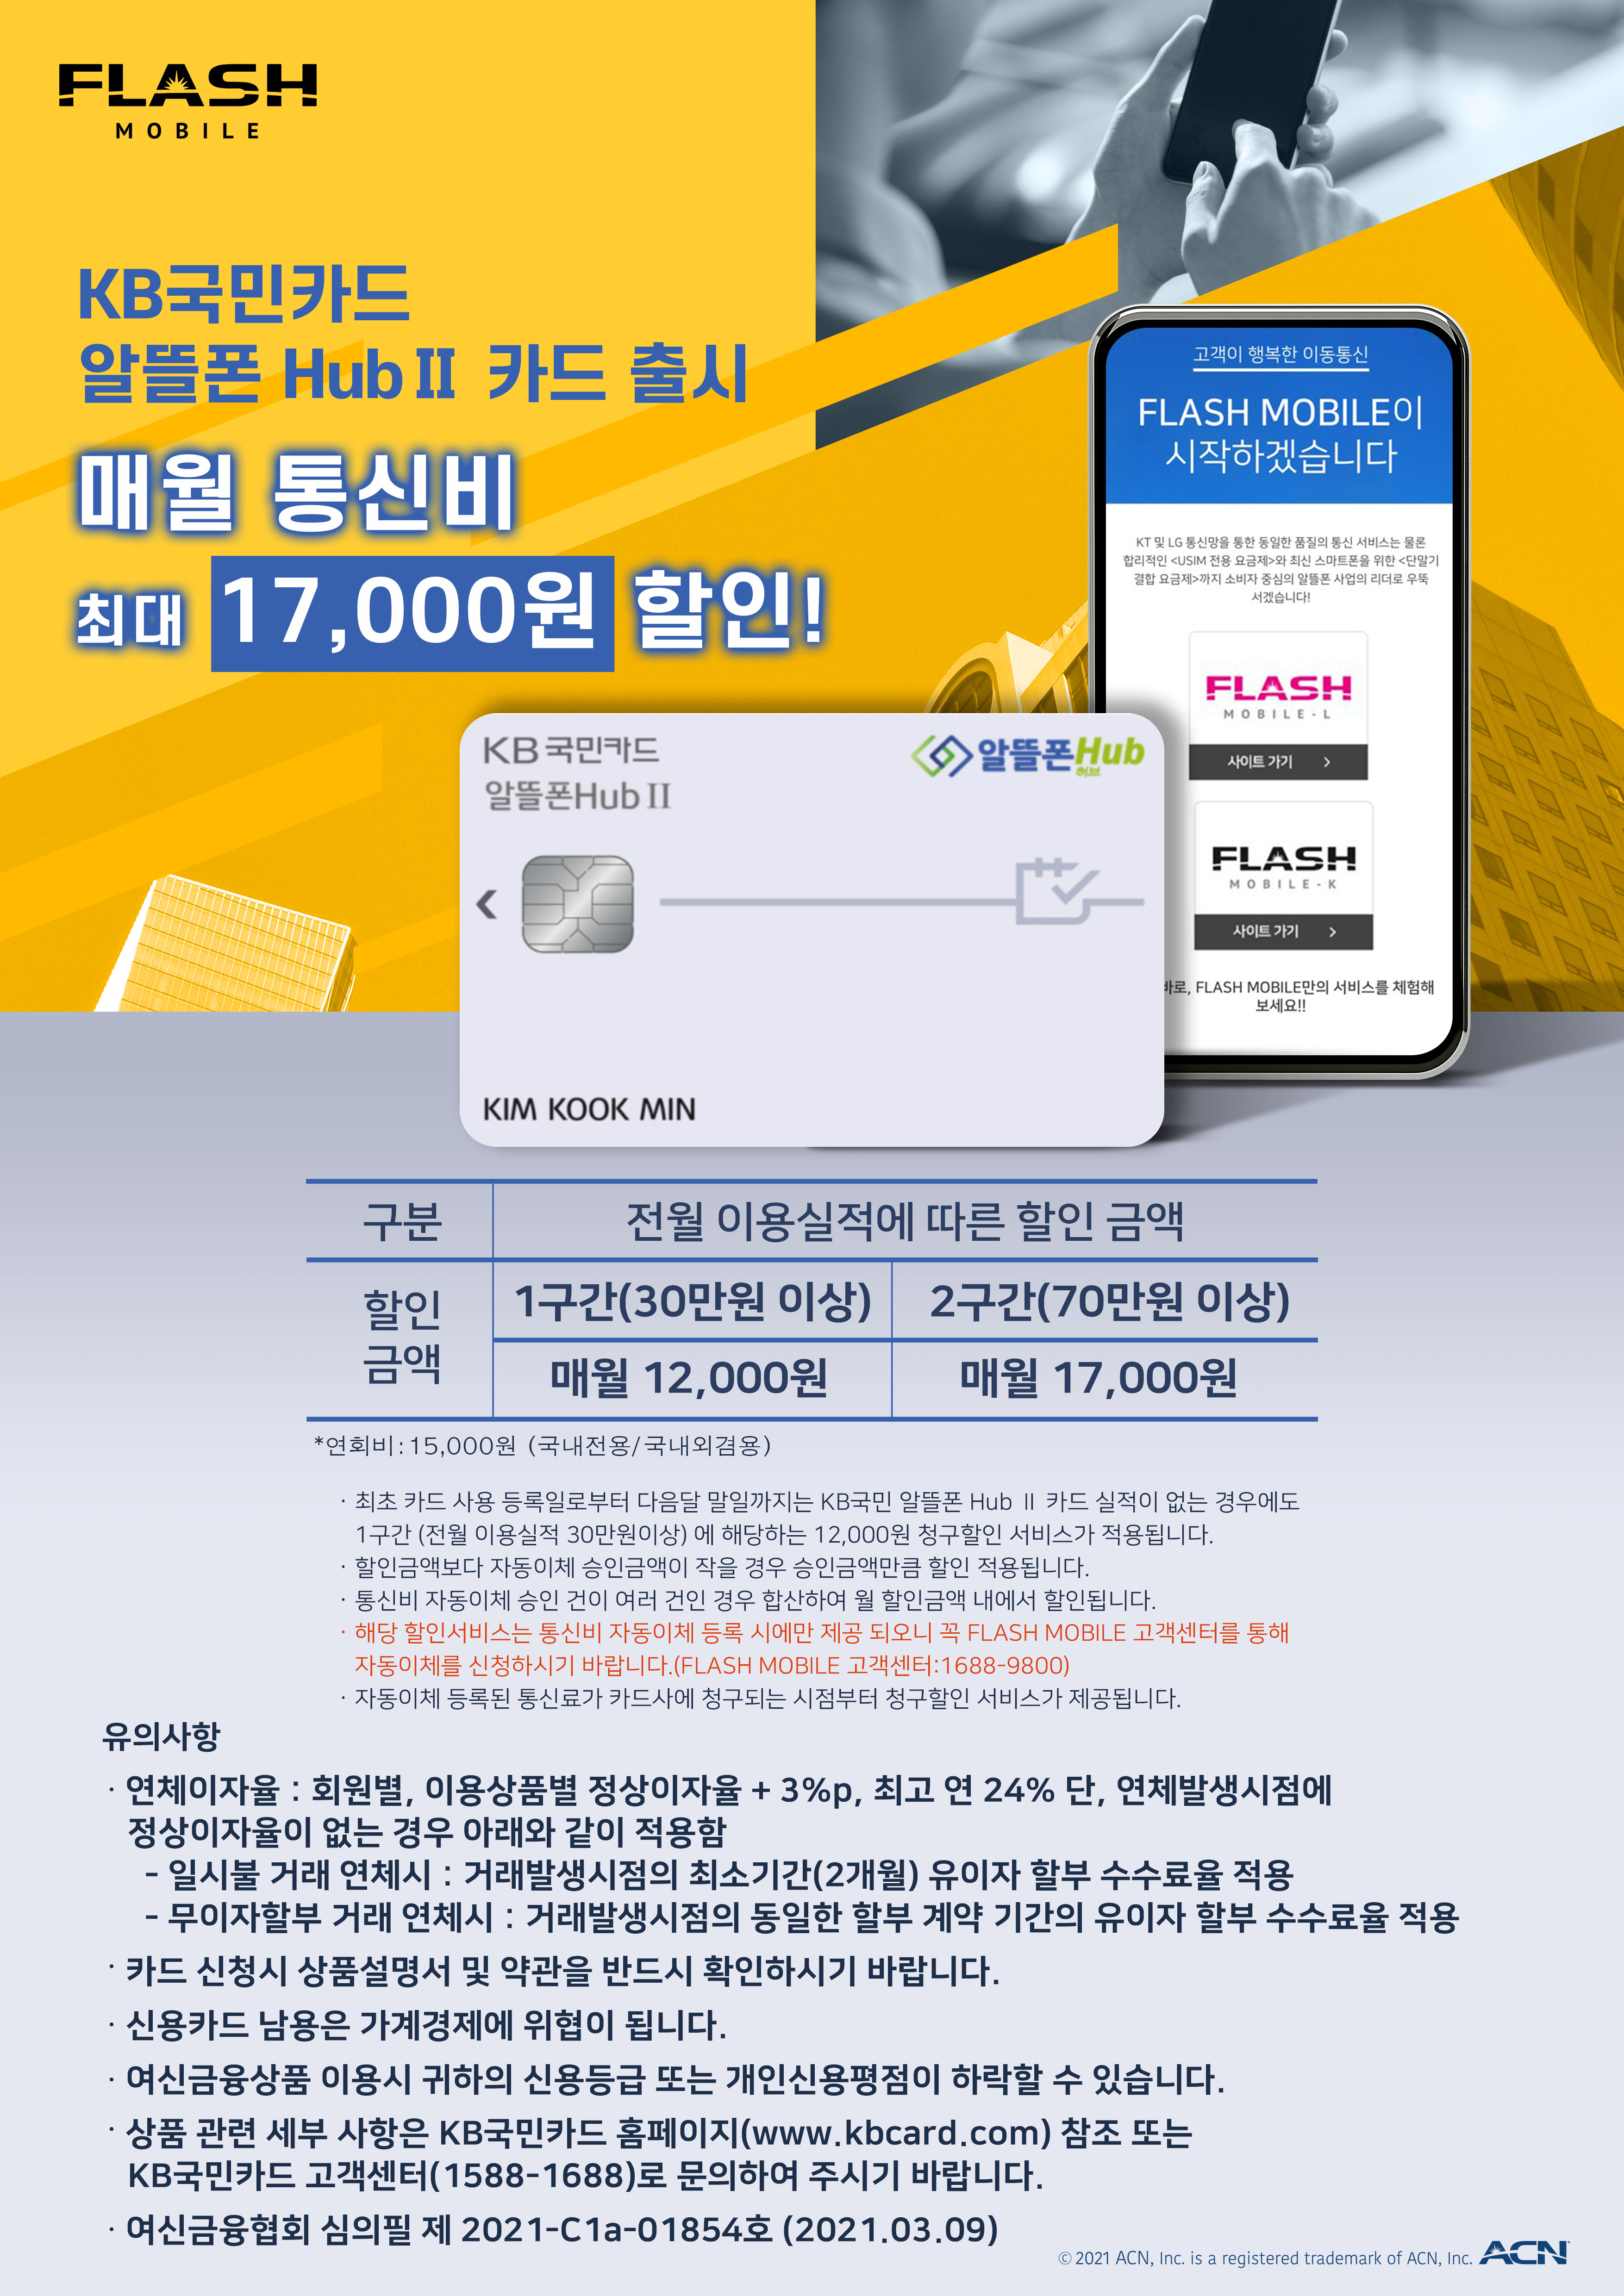 FLASH MOBILE KB국민카드 알뜰폰 HubⅡ 카드 출시